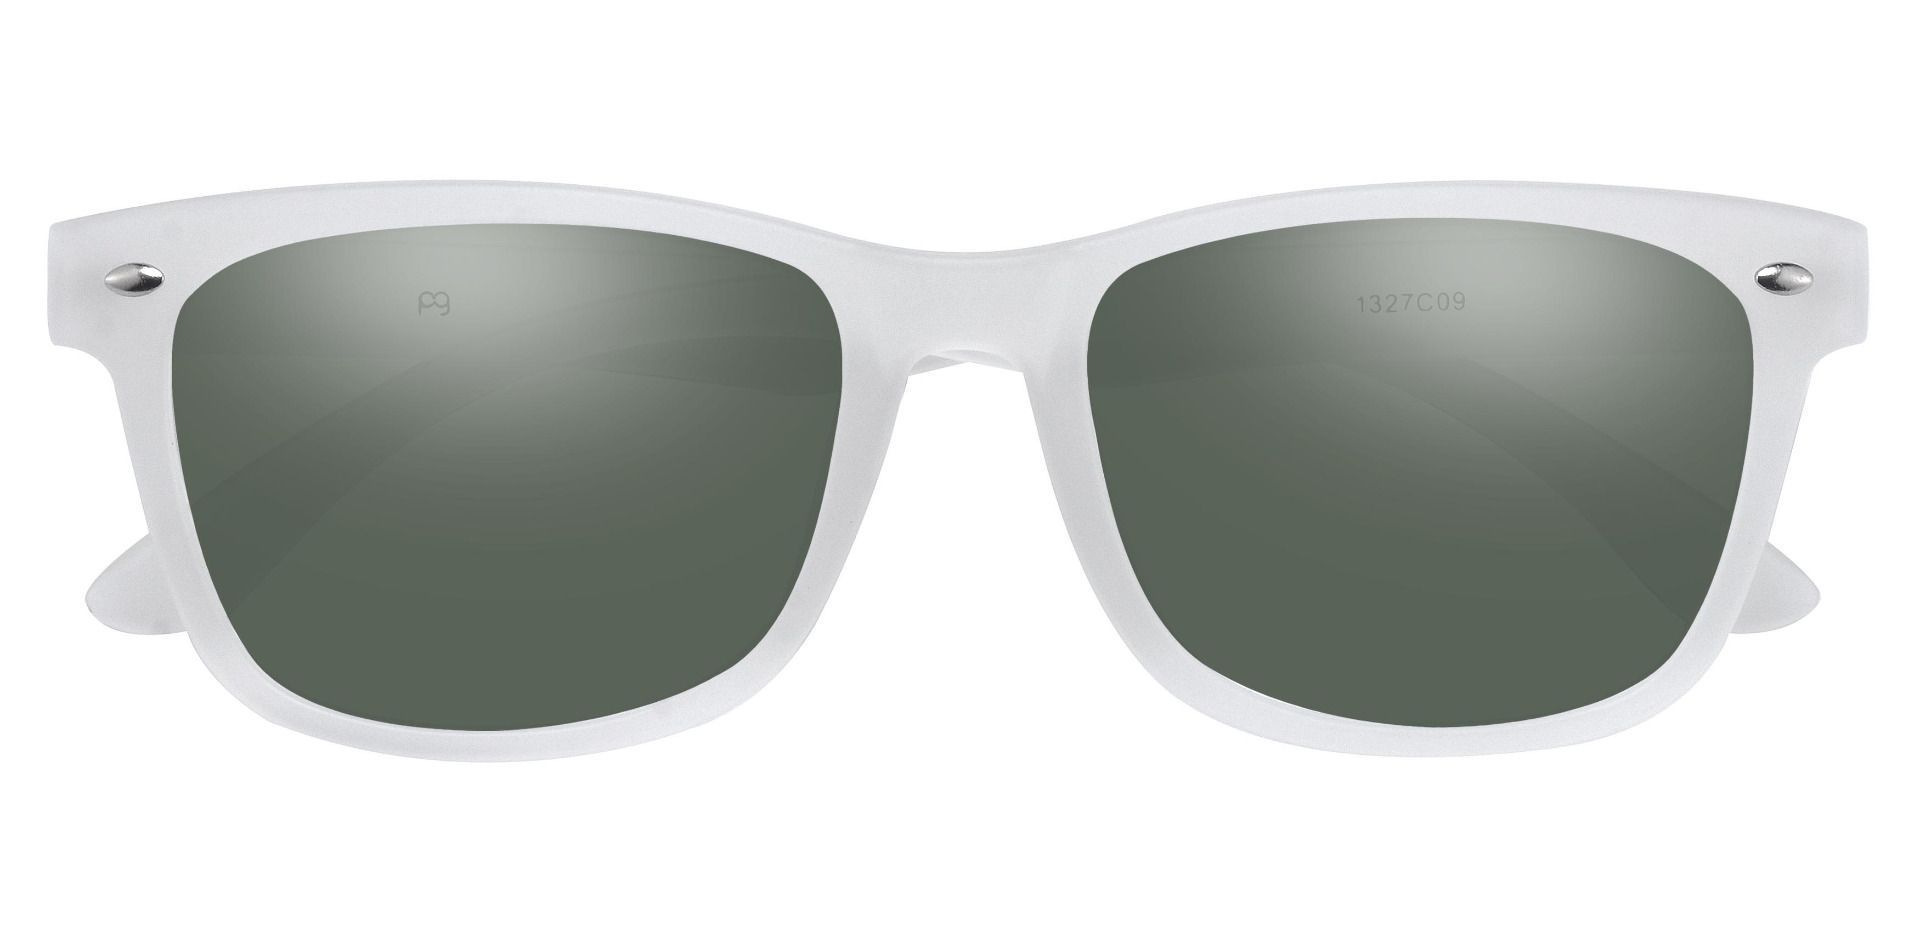 Anderson Classic Square Prescription Sunglasses - Clear Frame With Green Lenses